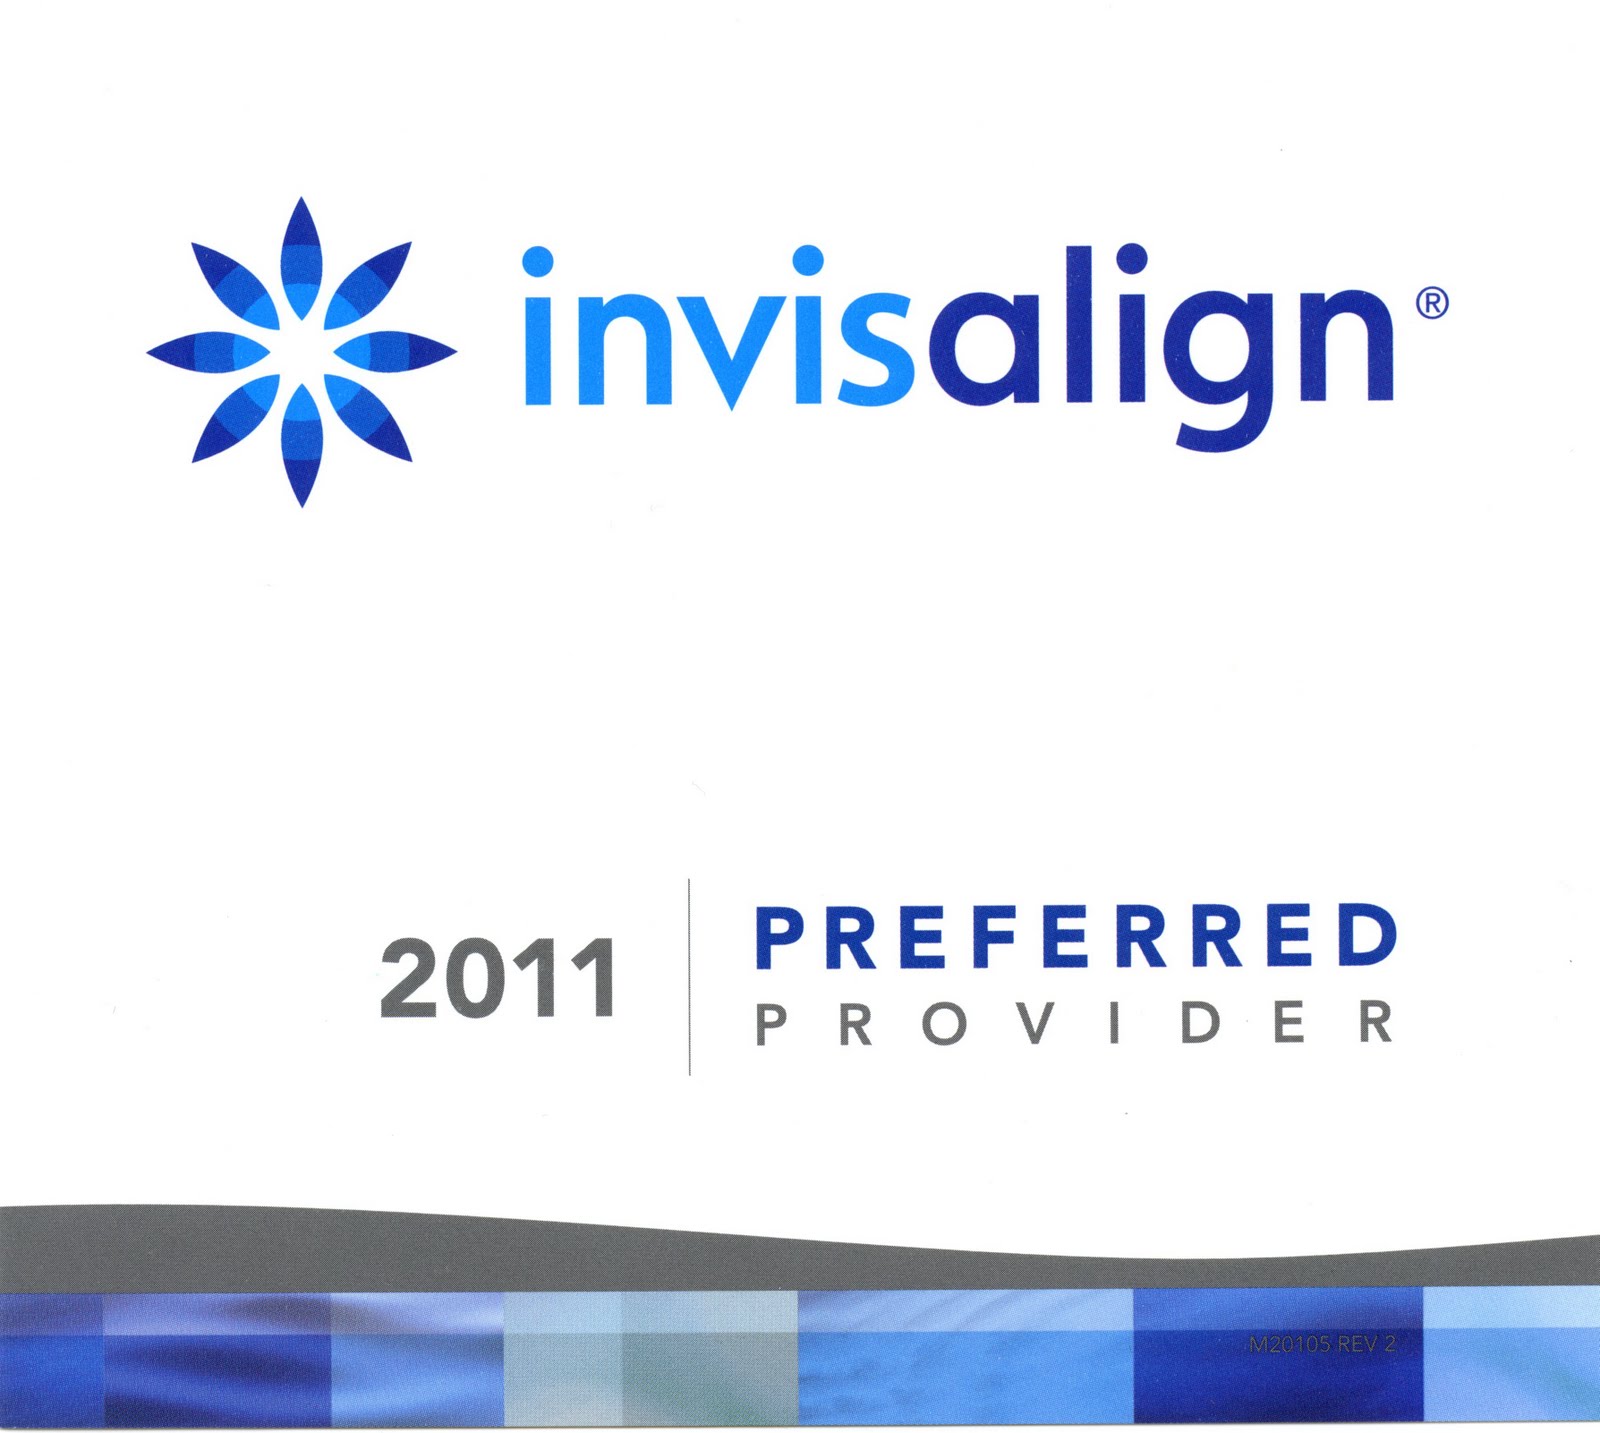 Invisalign Preverred Provider Logo photo - 1